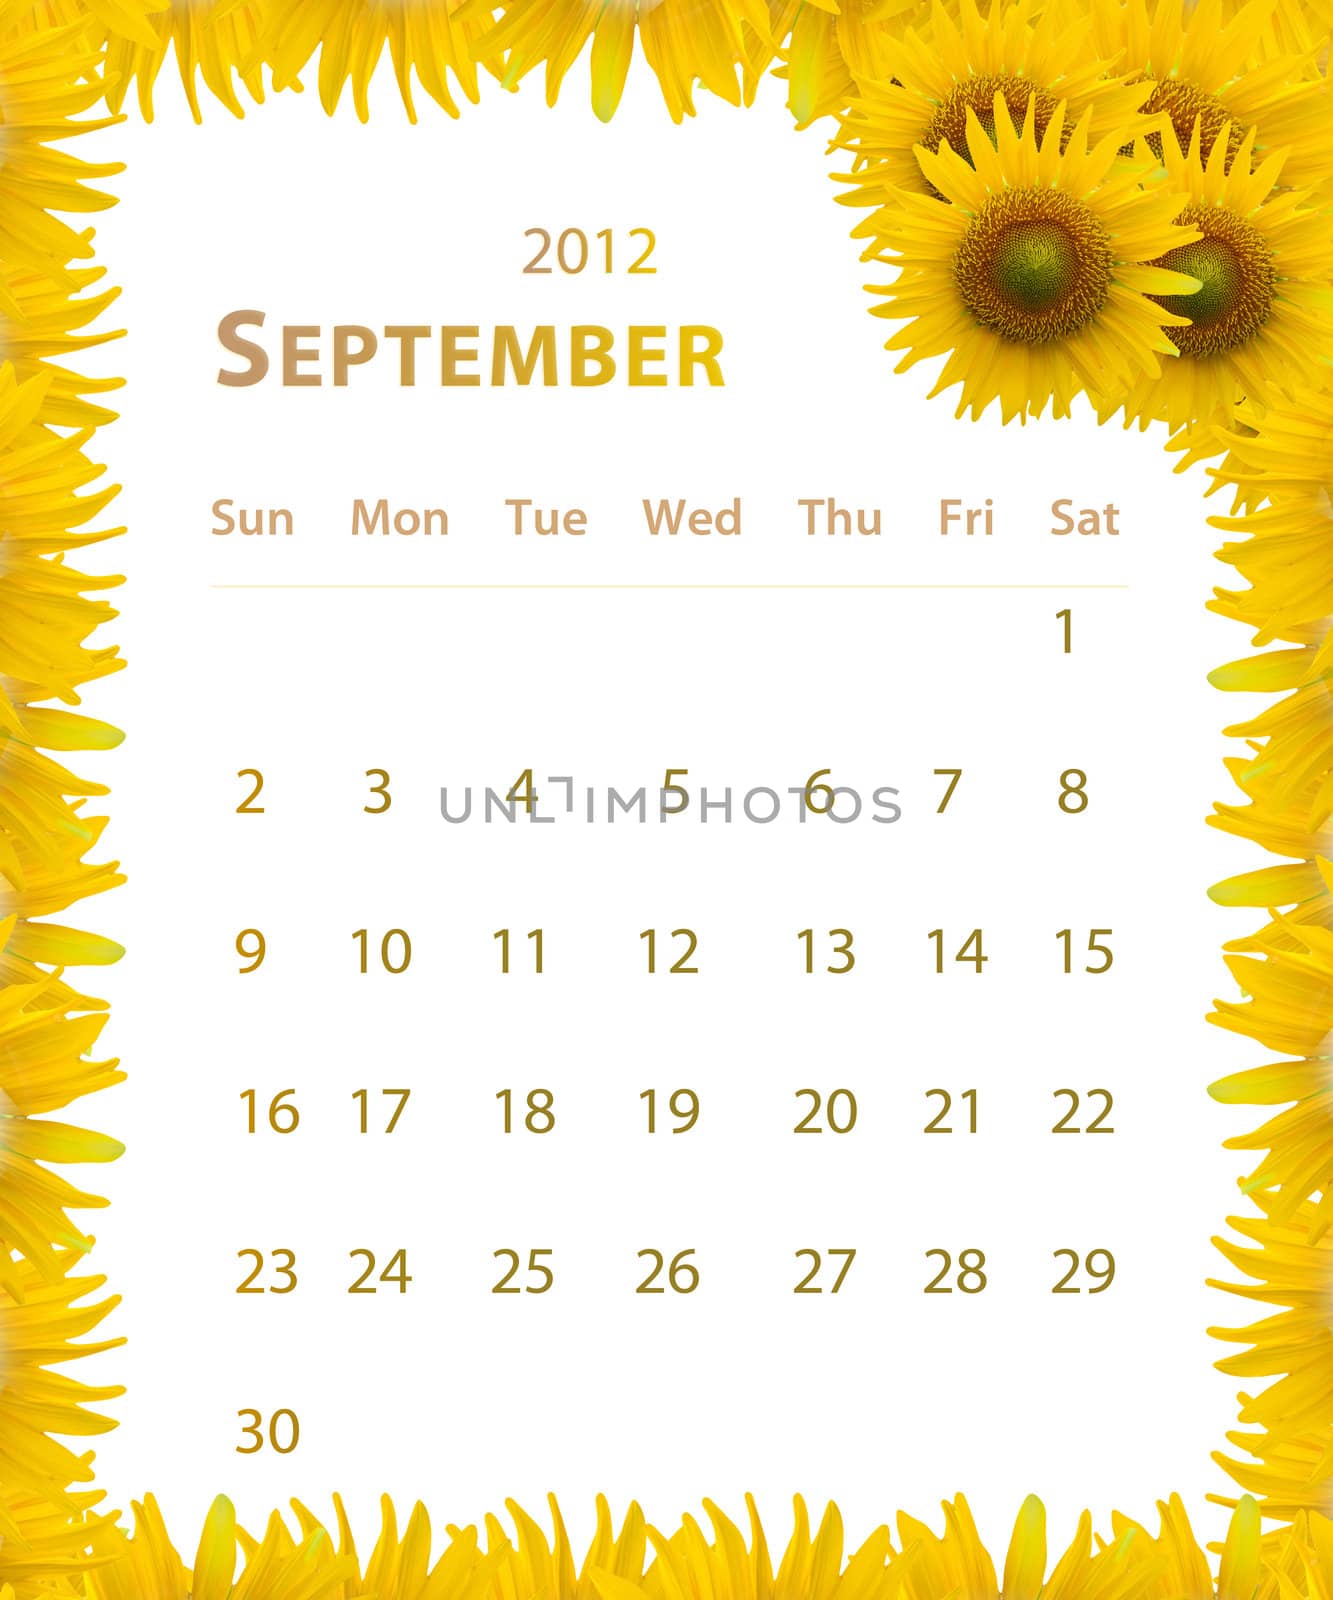 2012 year calendar ,September with Sunflower frame design by jakgree